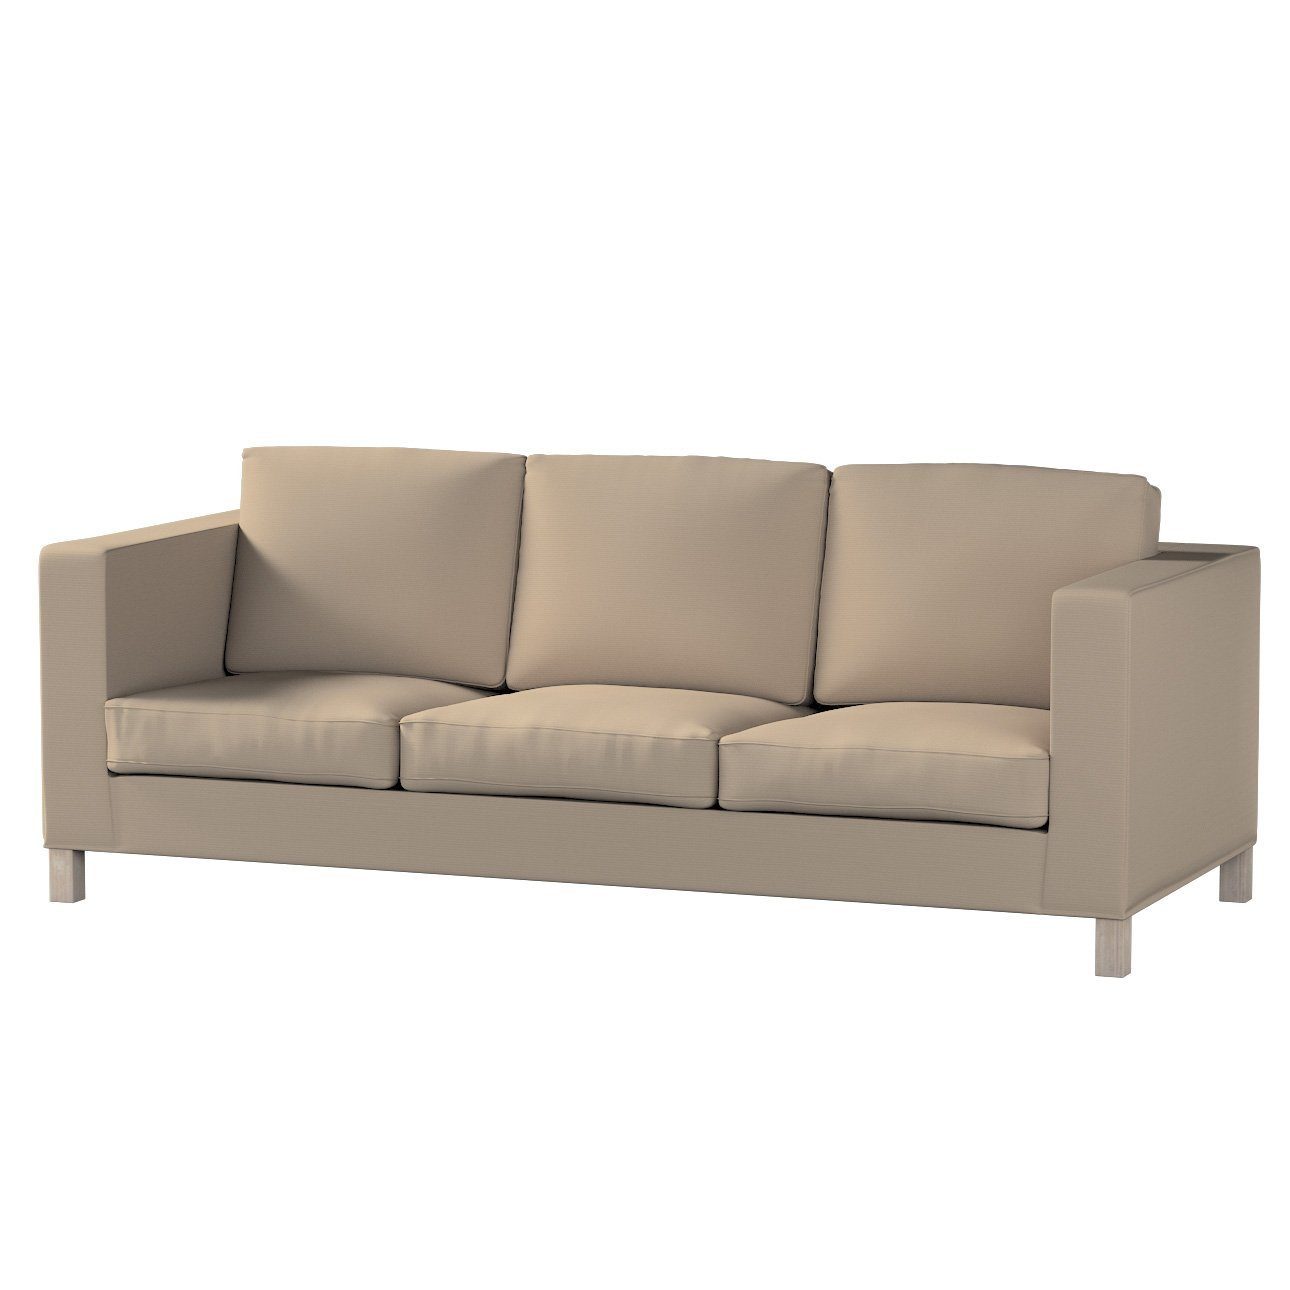 Sofahusse Karlanda 3-Sitzer Sofa nicht ausklappbar kurz, Cotton Panama, Dekoria grau-braun